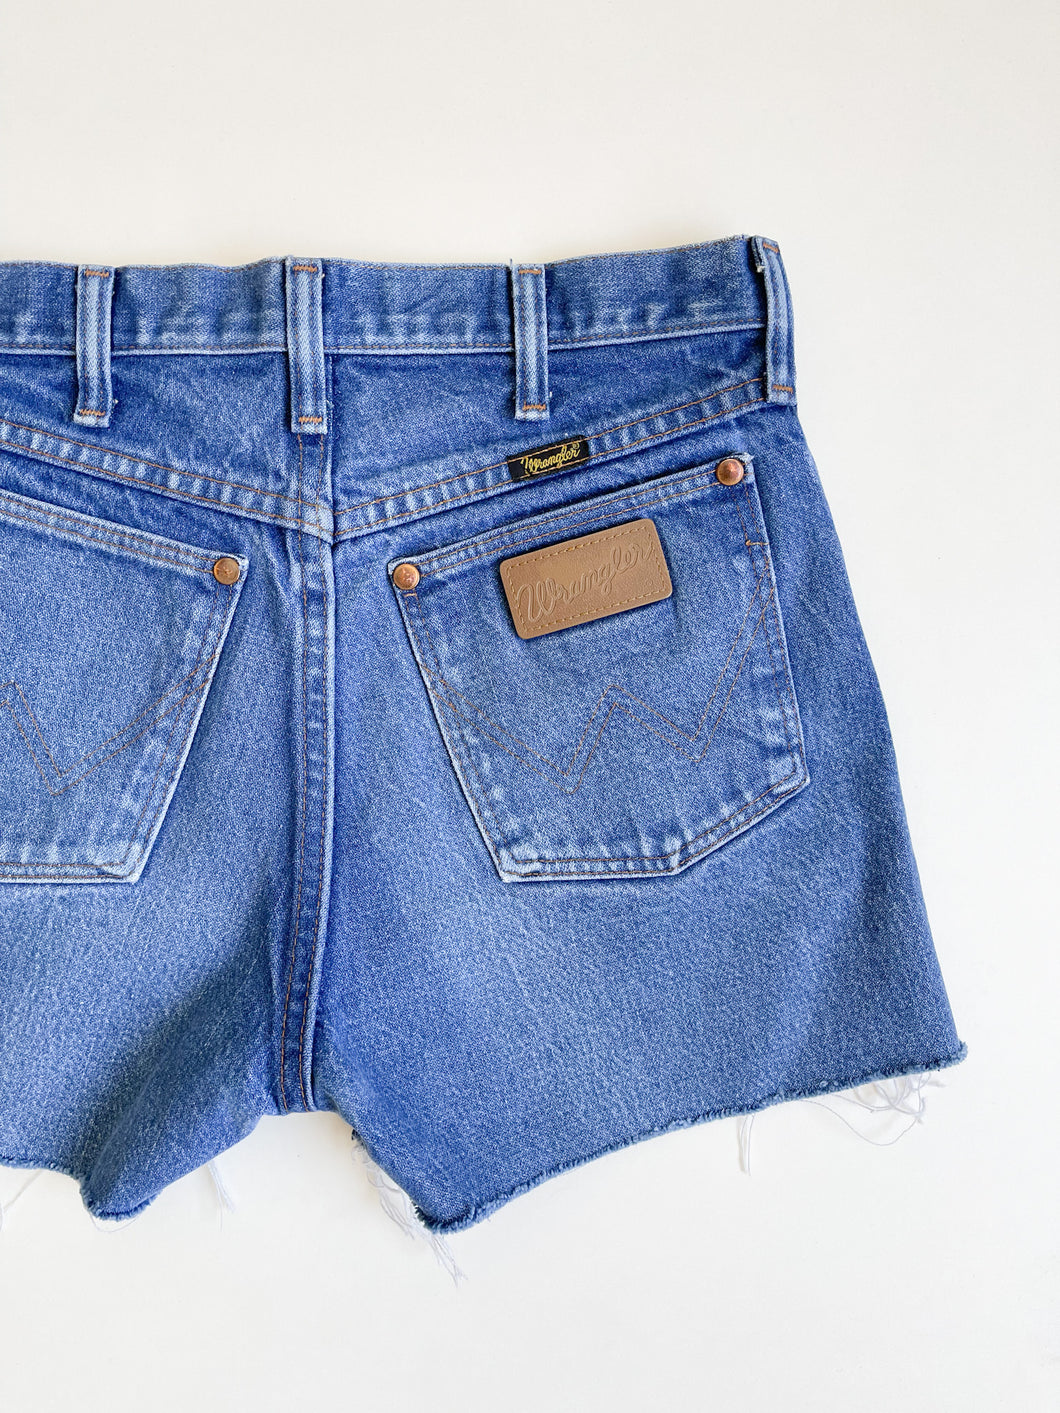 Vintage Wrangler Cutoff Shorts - 28